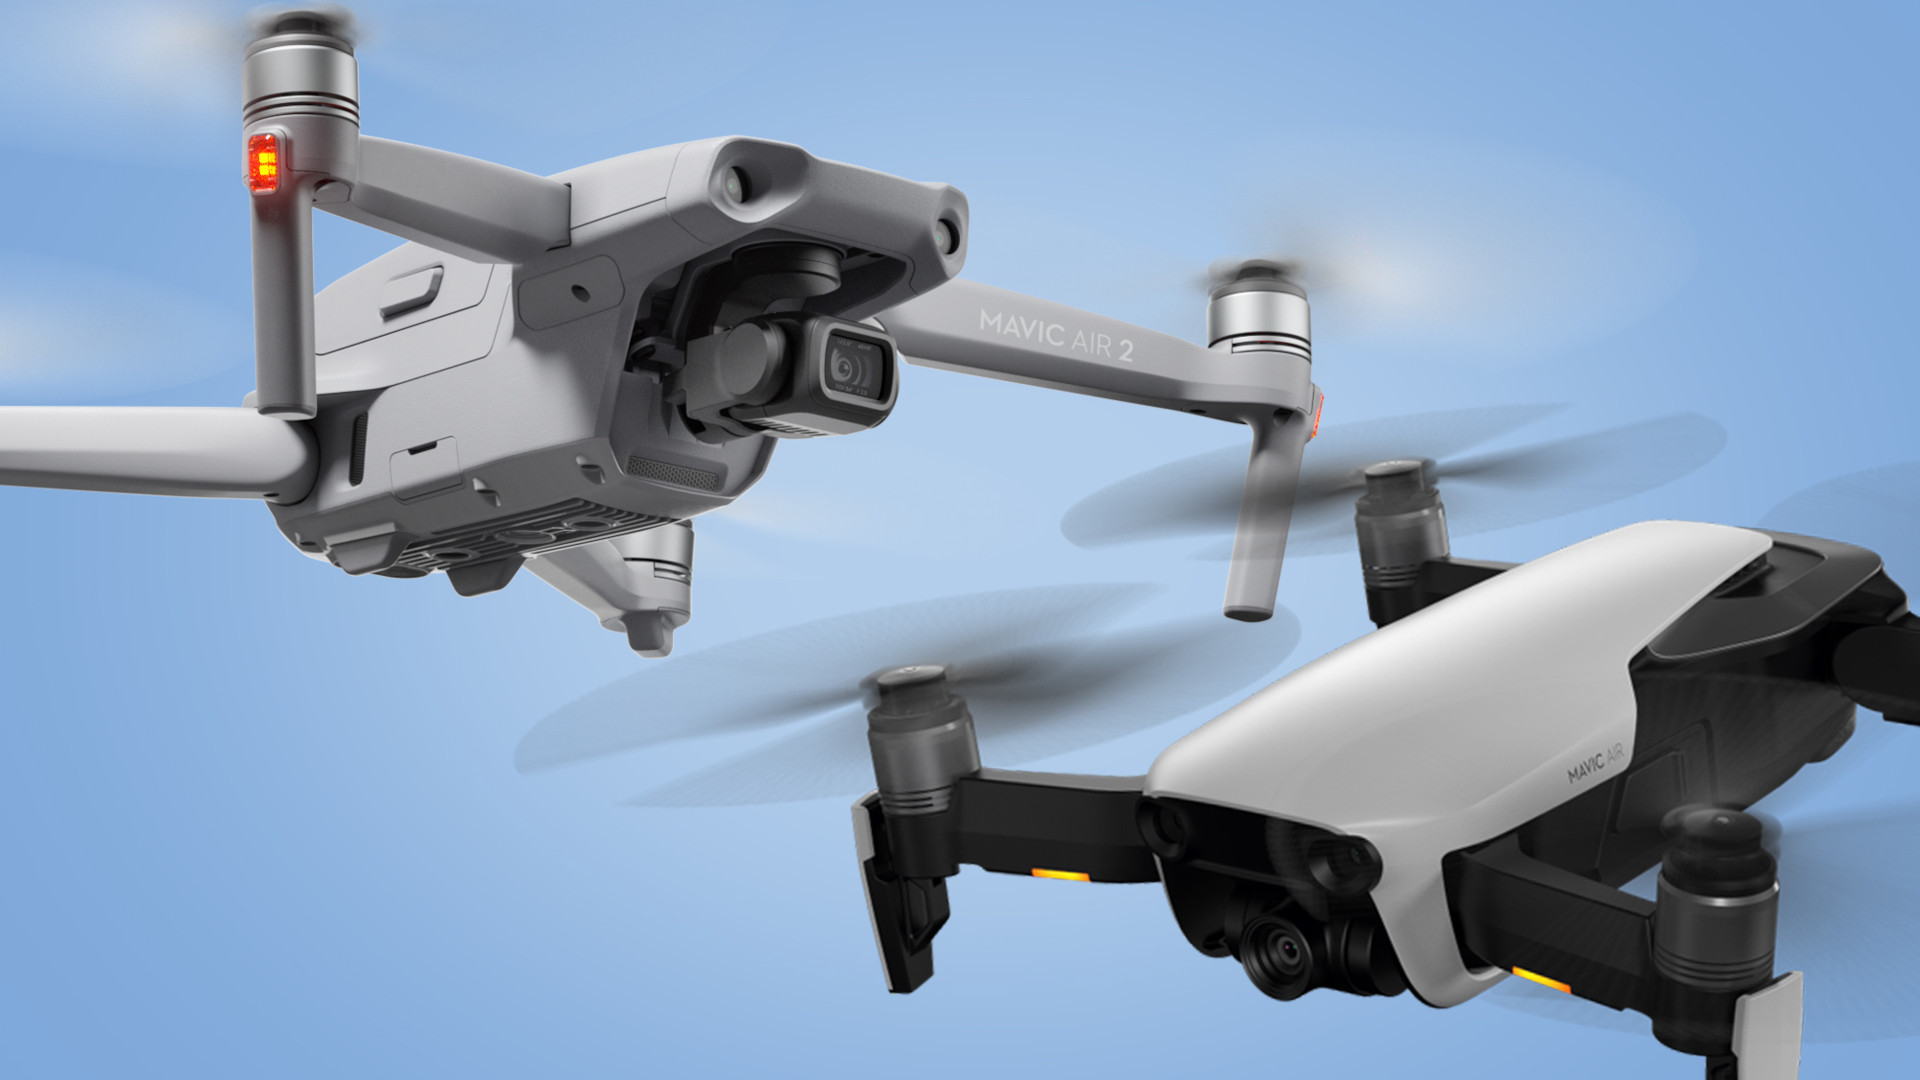 Mavic AIR 2 and Mavic 2 Pro – drones for professionals